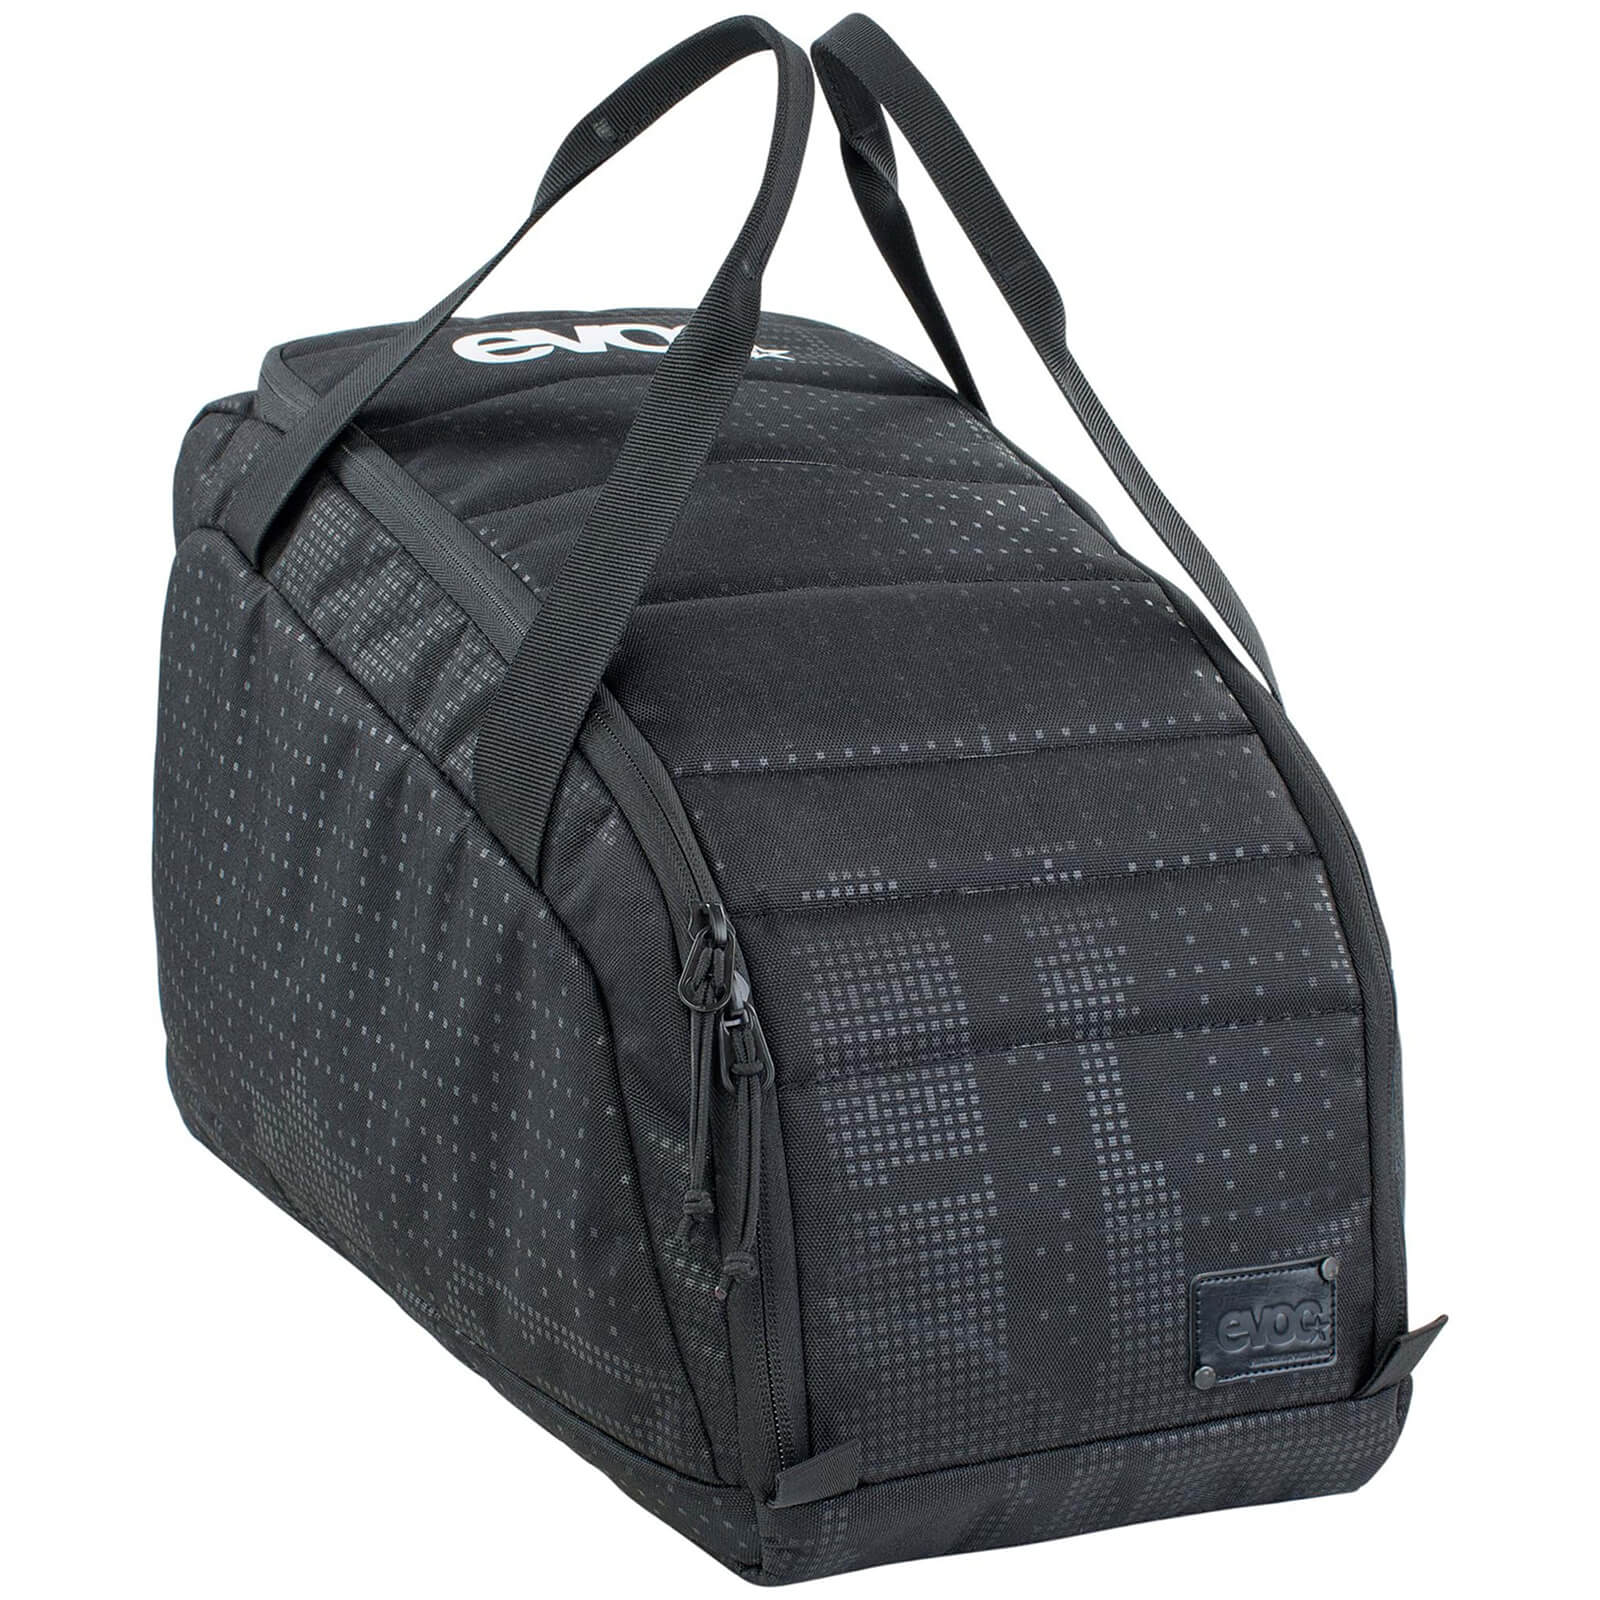 Evoc 20L Gear Bag - Black